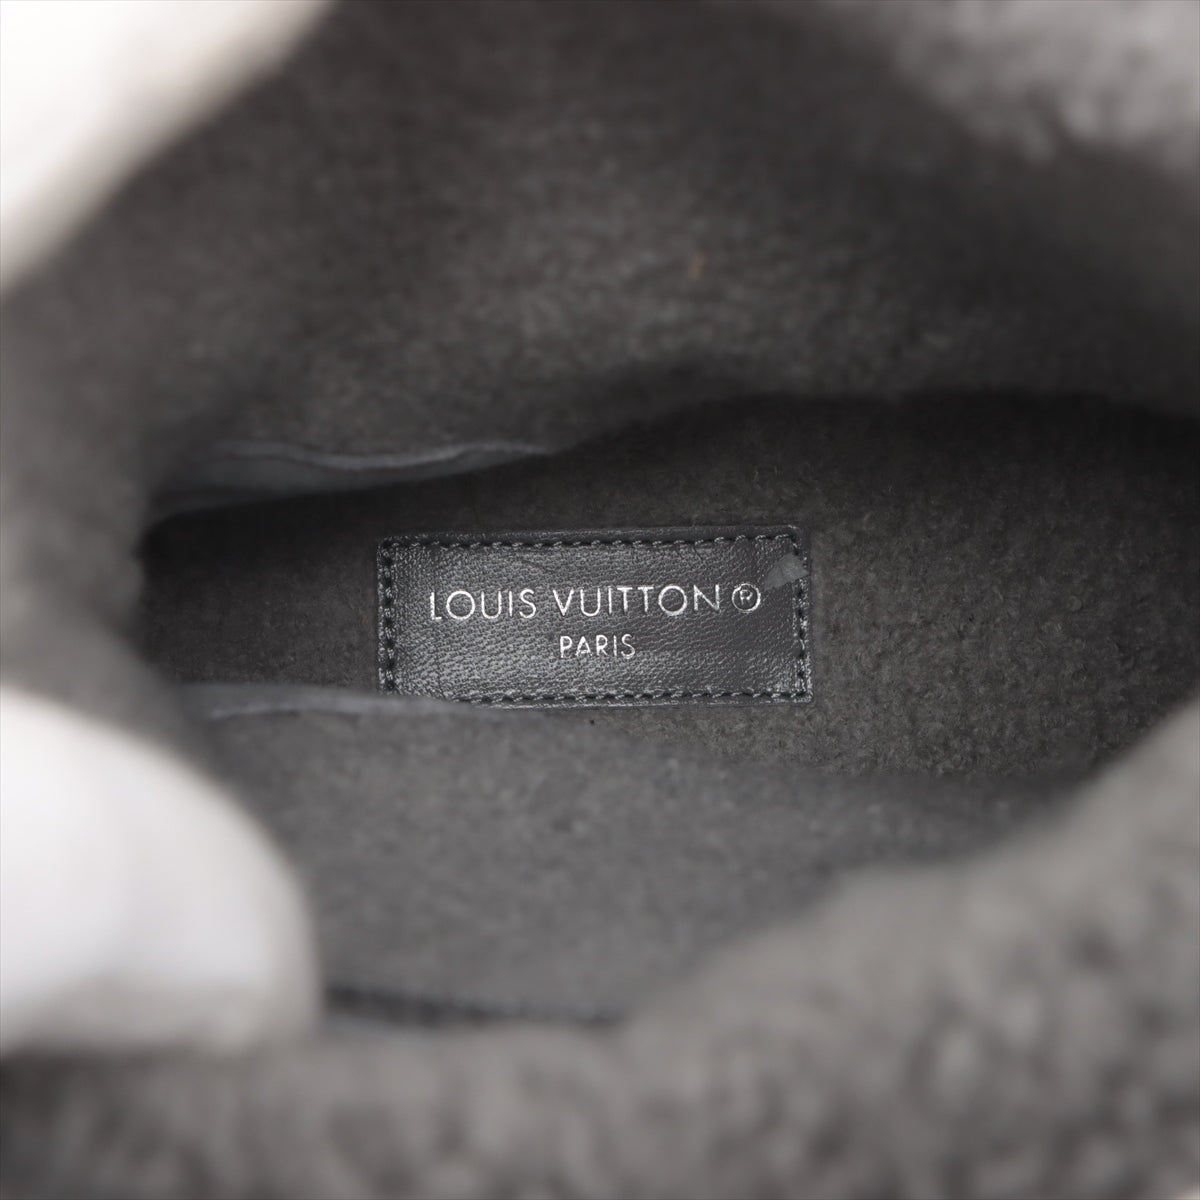 Louis Vuitton Snowdrop Line 22 Years Mouton Short Boots 37 1/2  Grey TC0272 Monogram Insol Boar